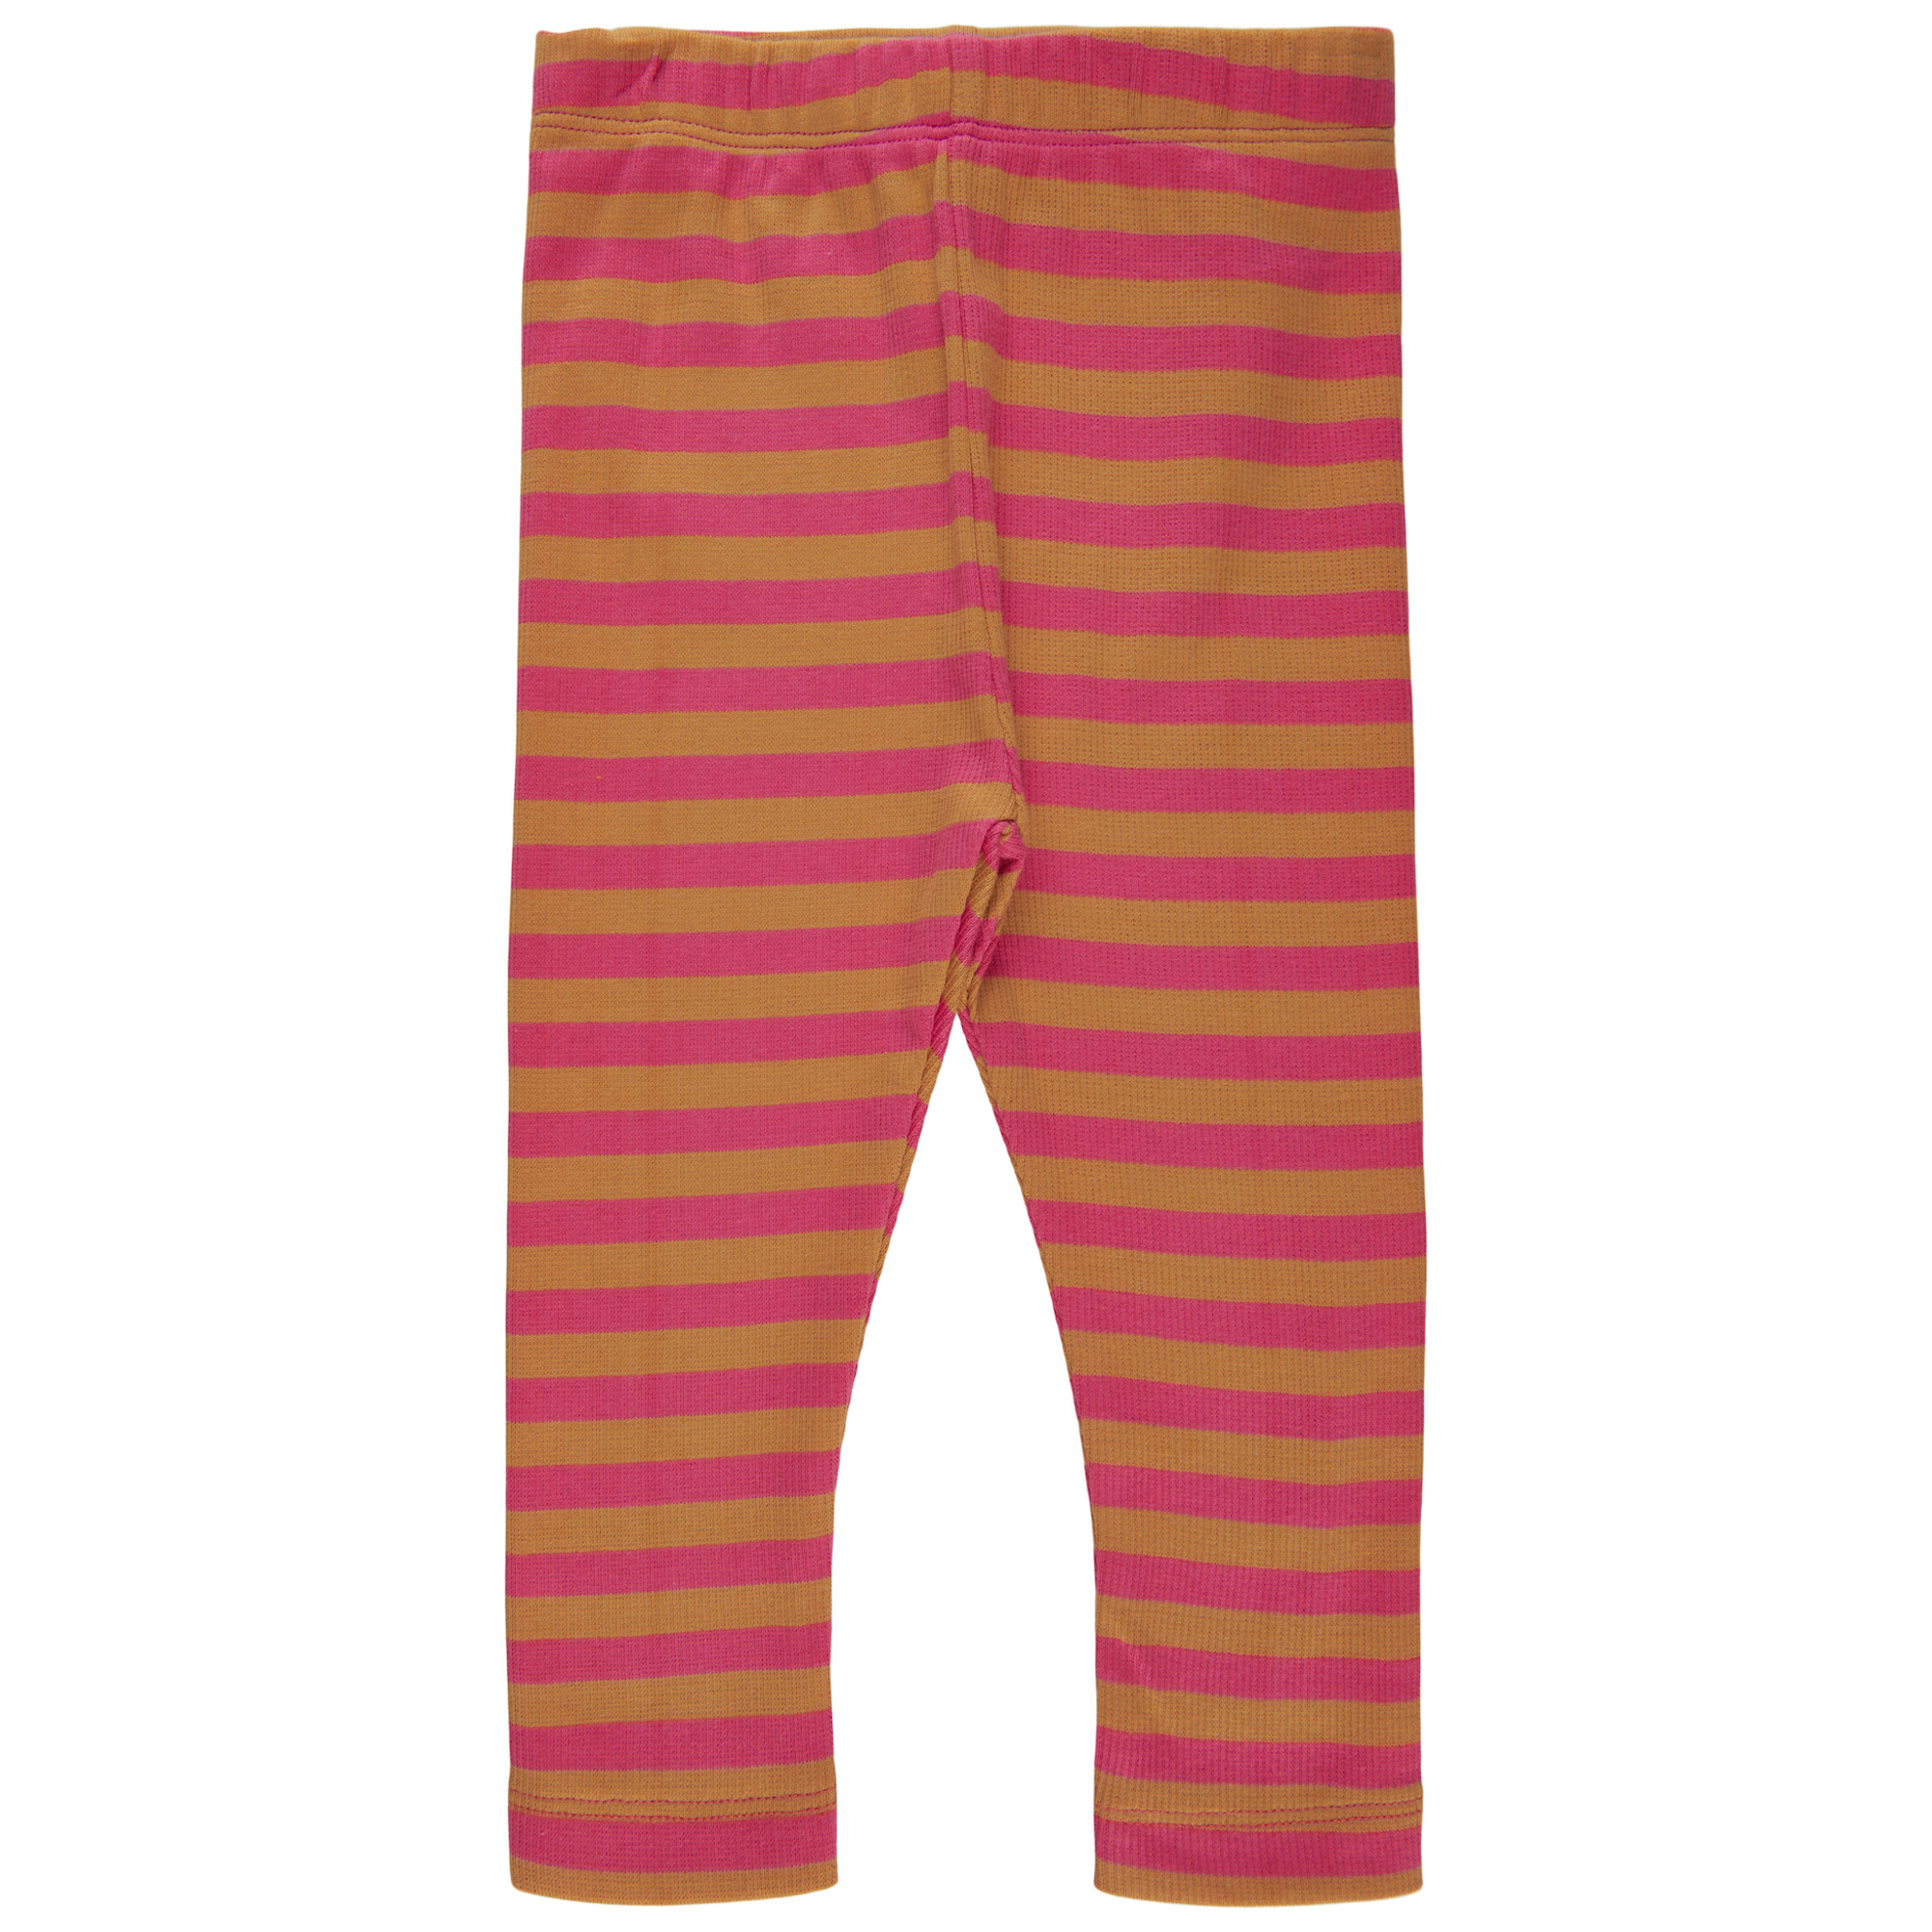 Soft Gallery - Issey YD Stripes Leggings, SG2103 - Yam / Pink